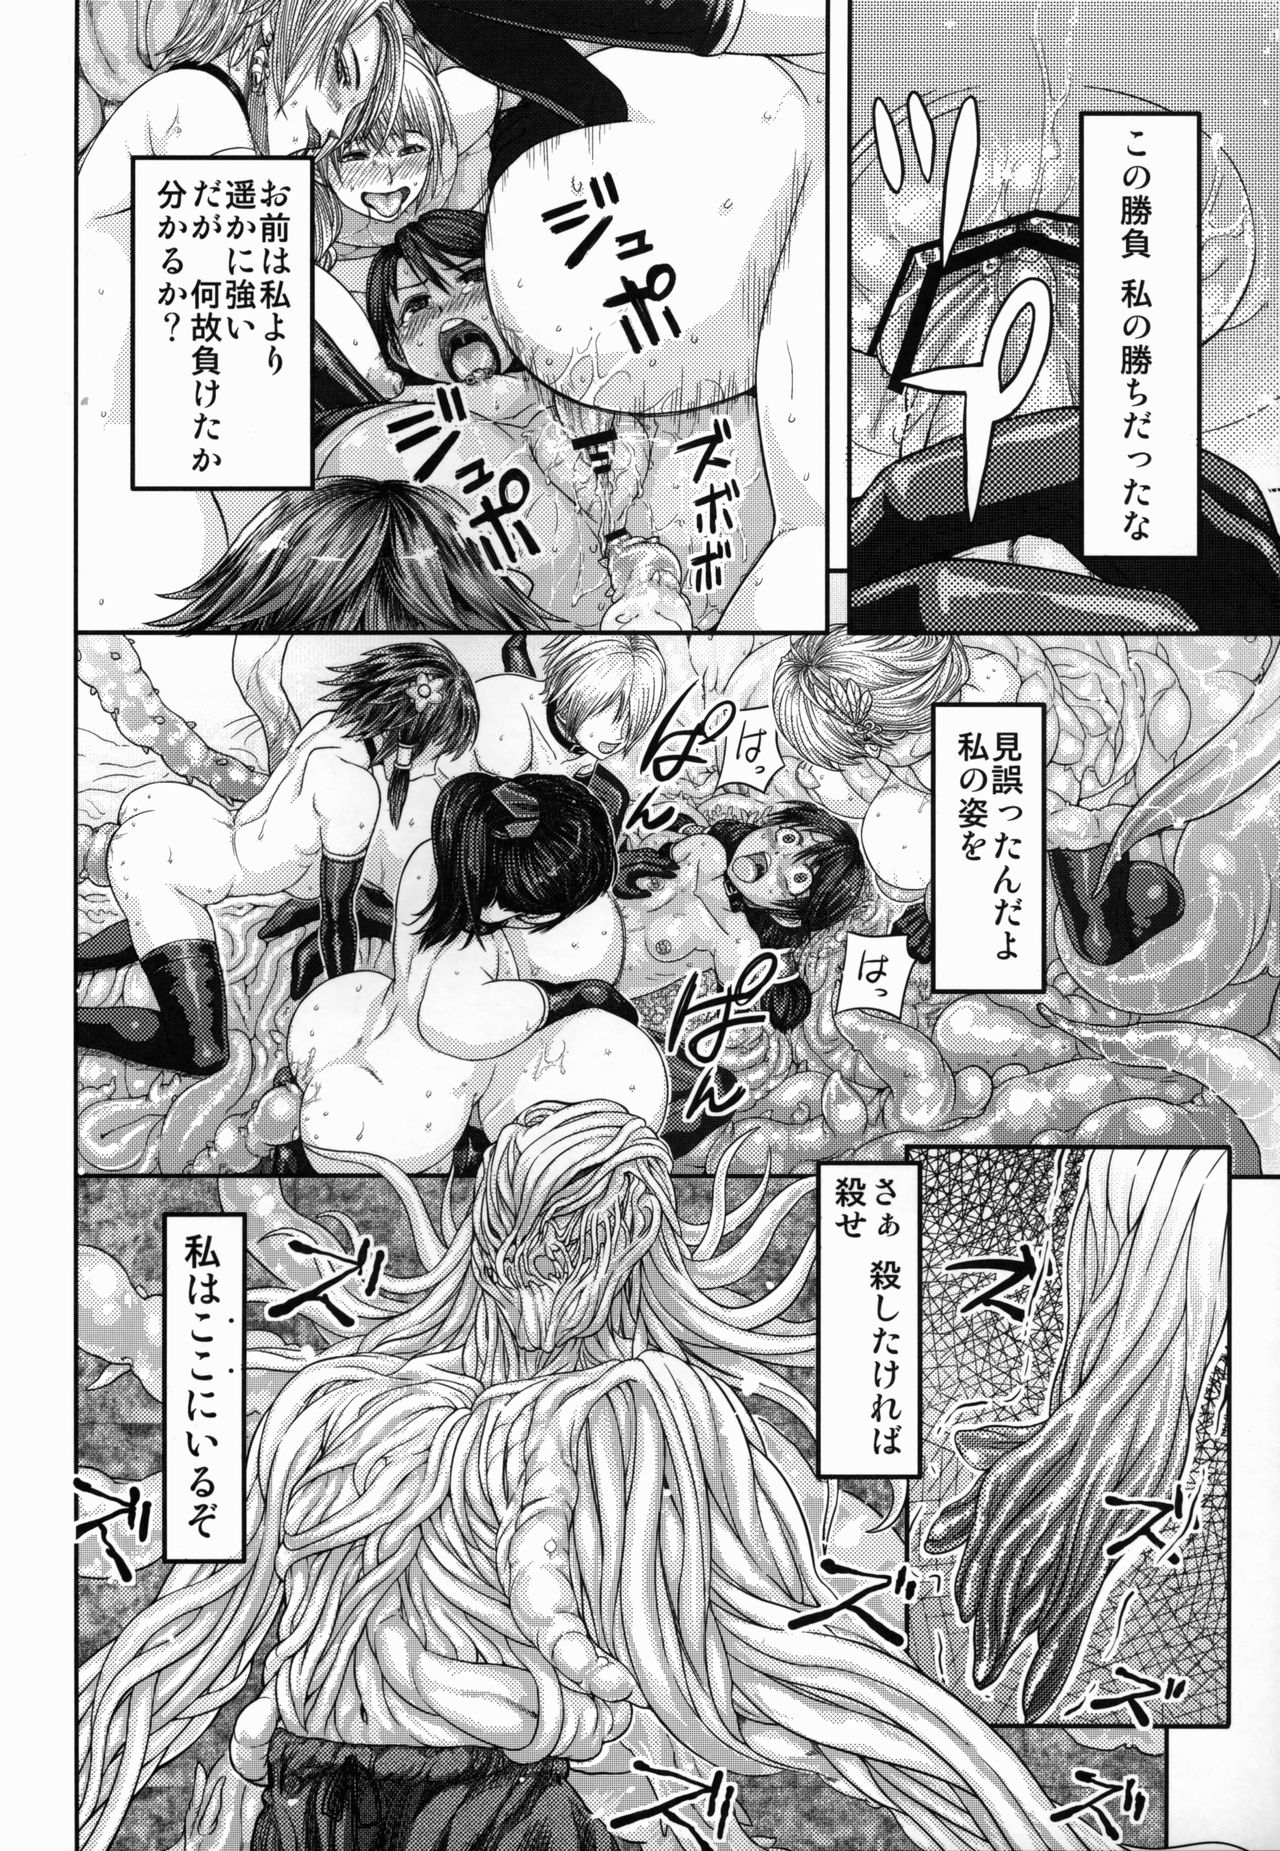 (C78) [MaruMaru Arumajiro (Majirou)] ARUMAJIBON! Kuroi Calibur - Kaze yo Kotaete (Soul Calibur) (C78) [まるまるアルマジロー (まじろー)] ARUMAJIBON!黒いキャリバー「風よ応えて」 (ソウルキャリバー)